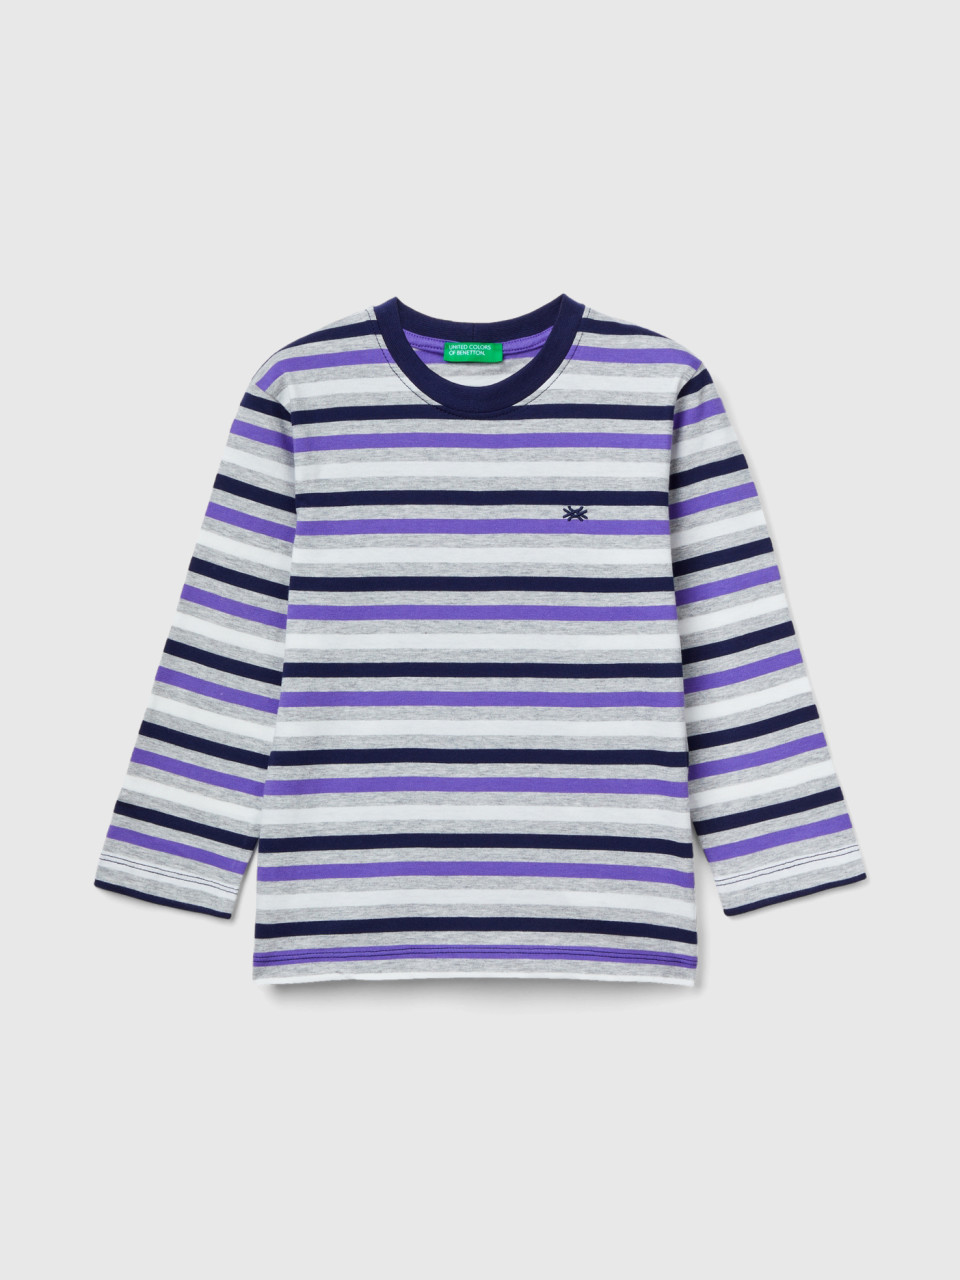 Benetton, Striped T-shirt In 100% Cotton, Multi-color, Kids